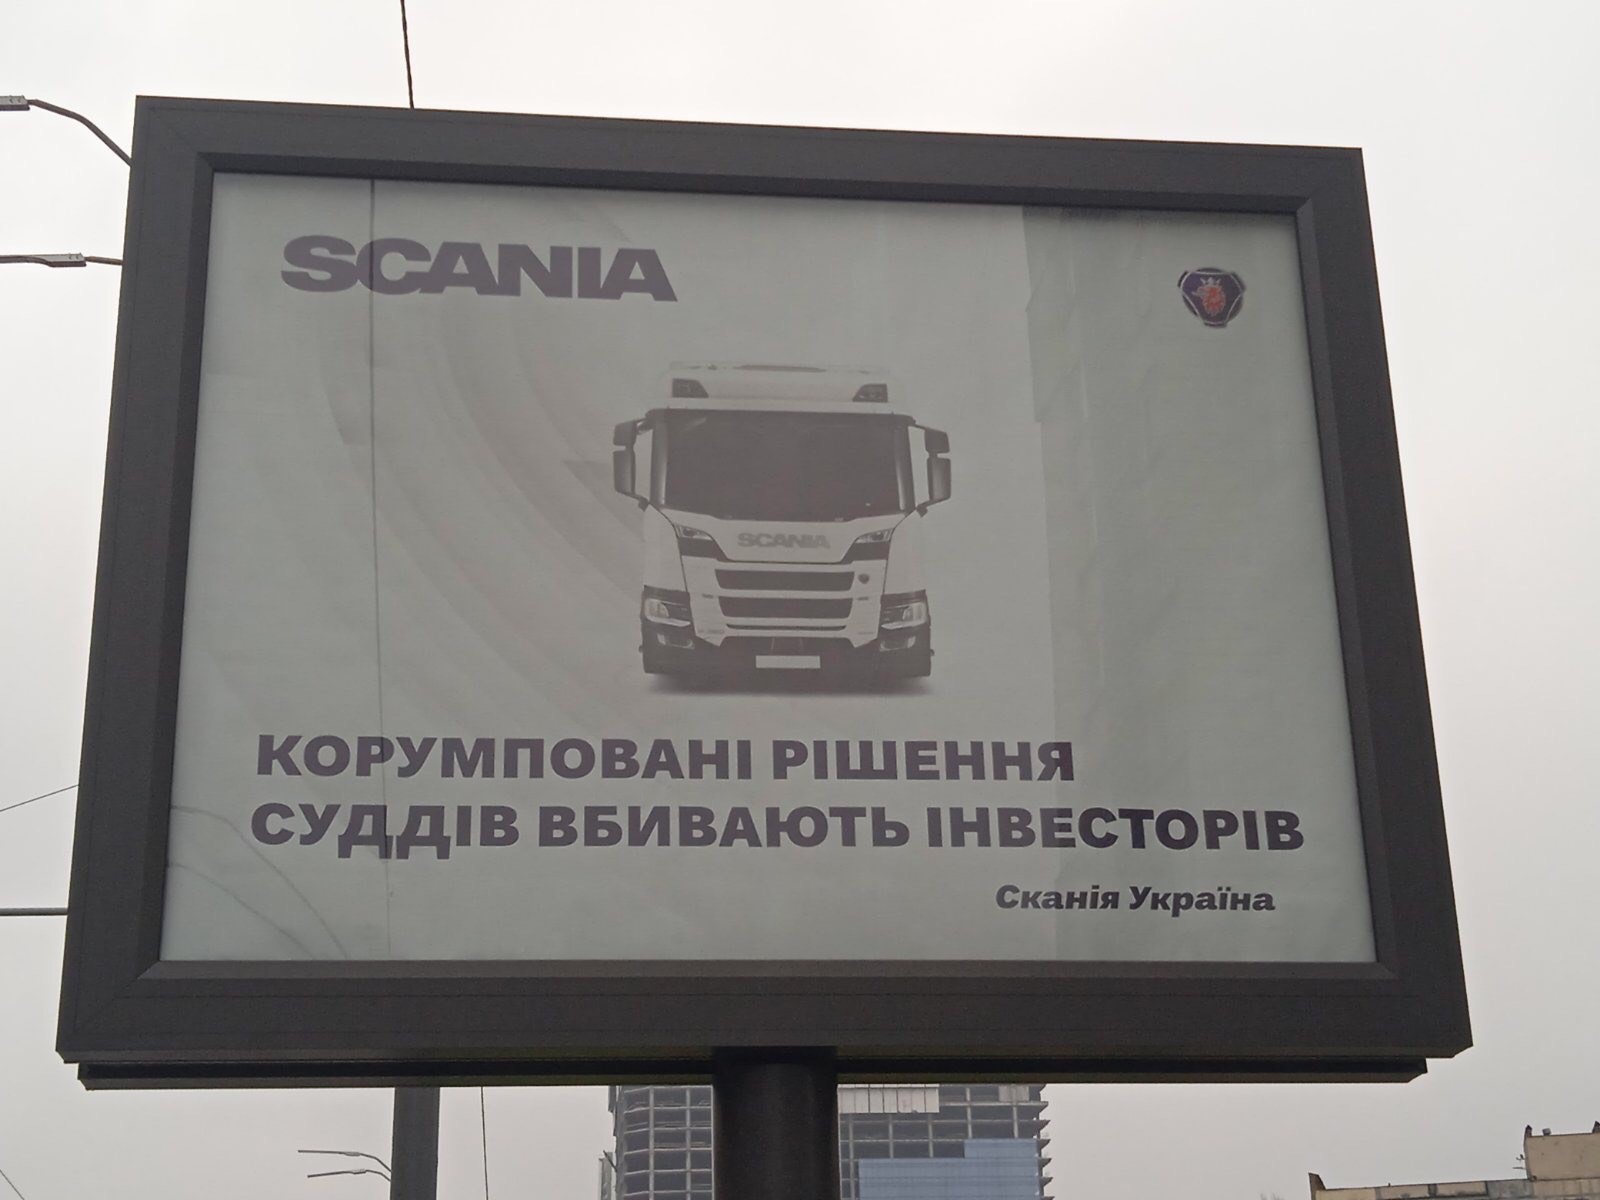   :   Scania     